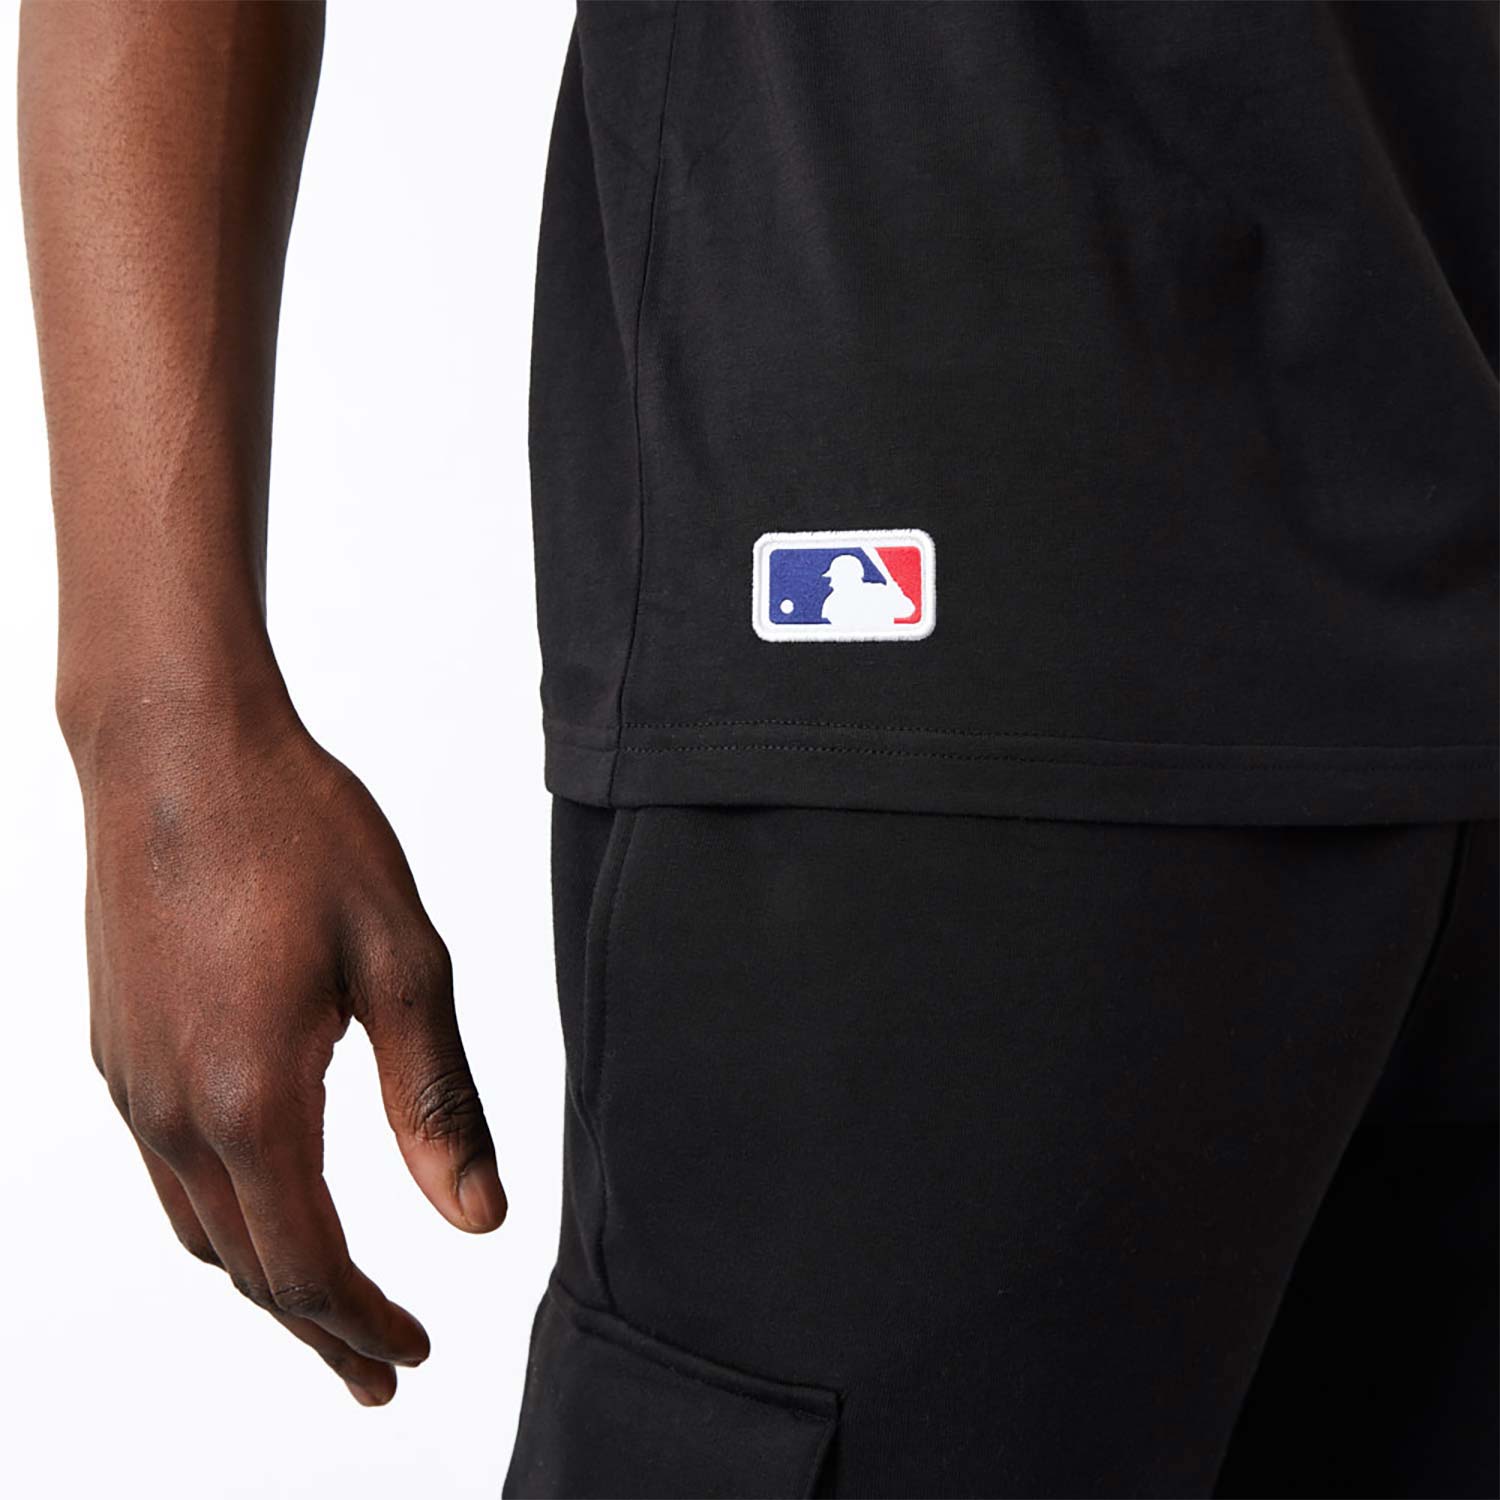 New York Yankees MLB League Essential Black T-Shirt